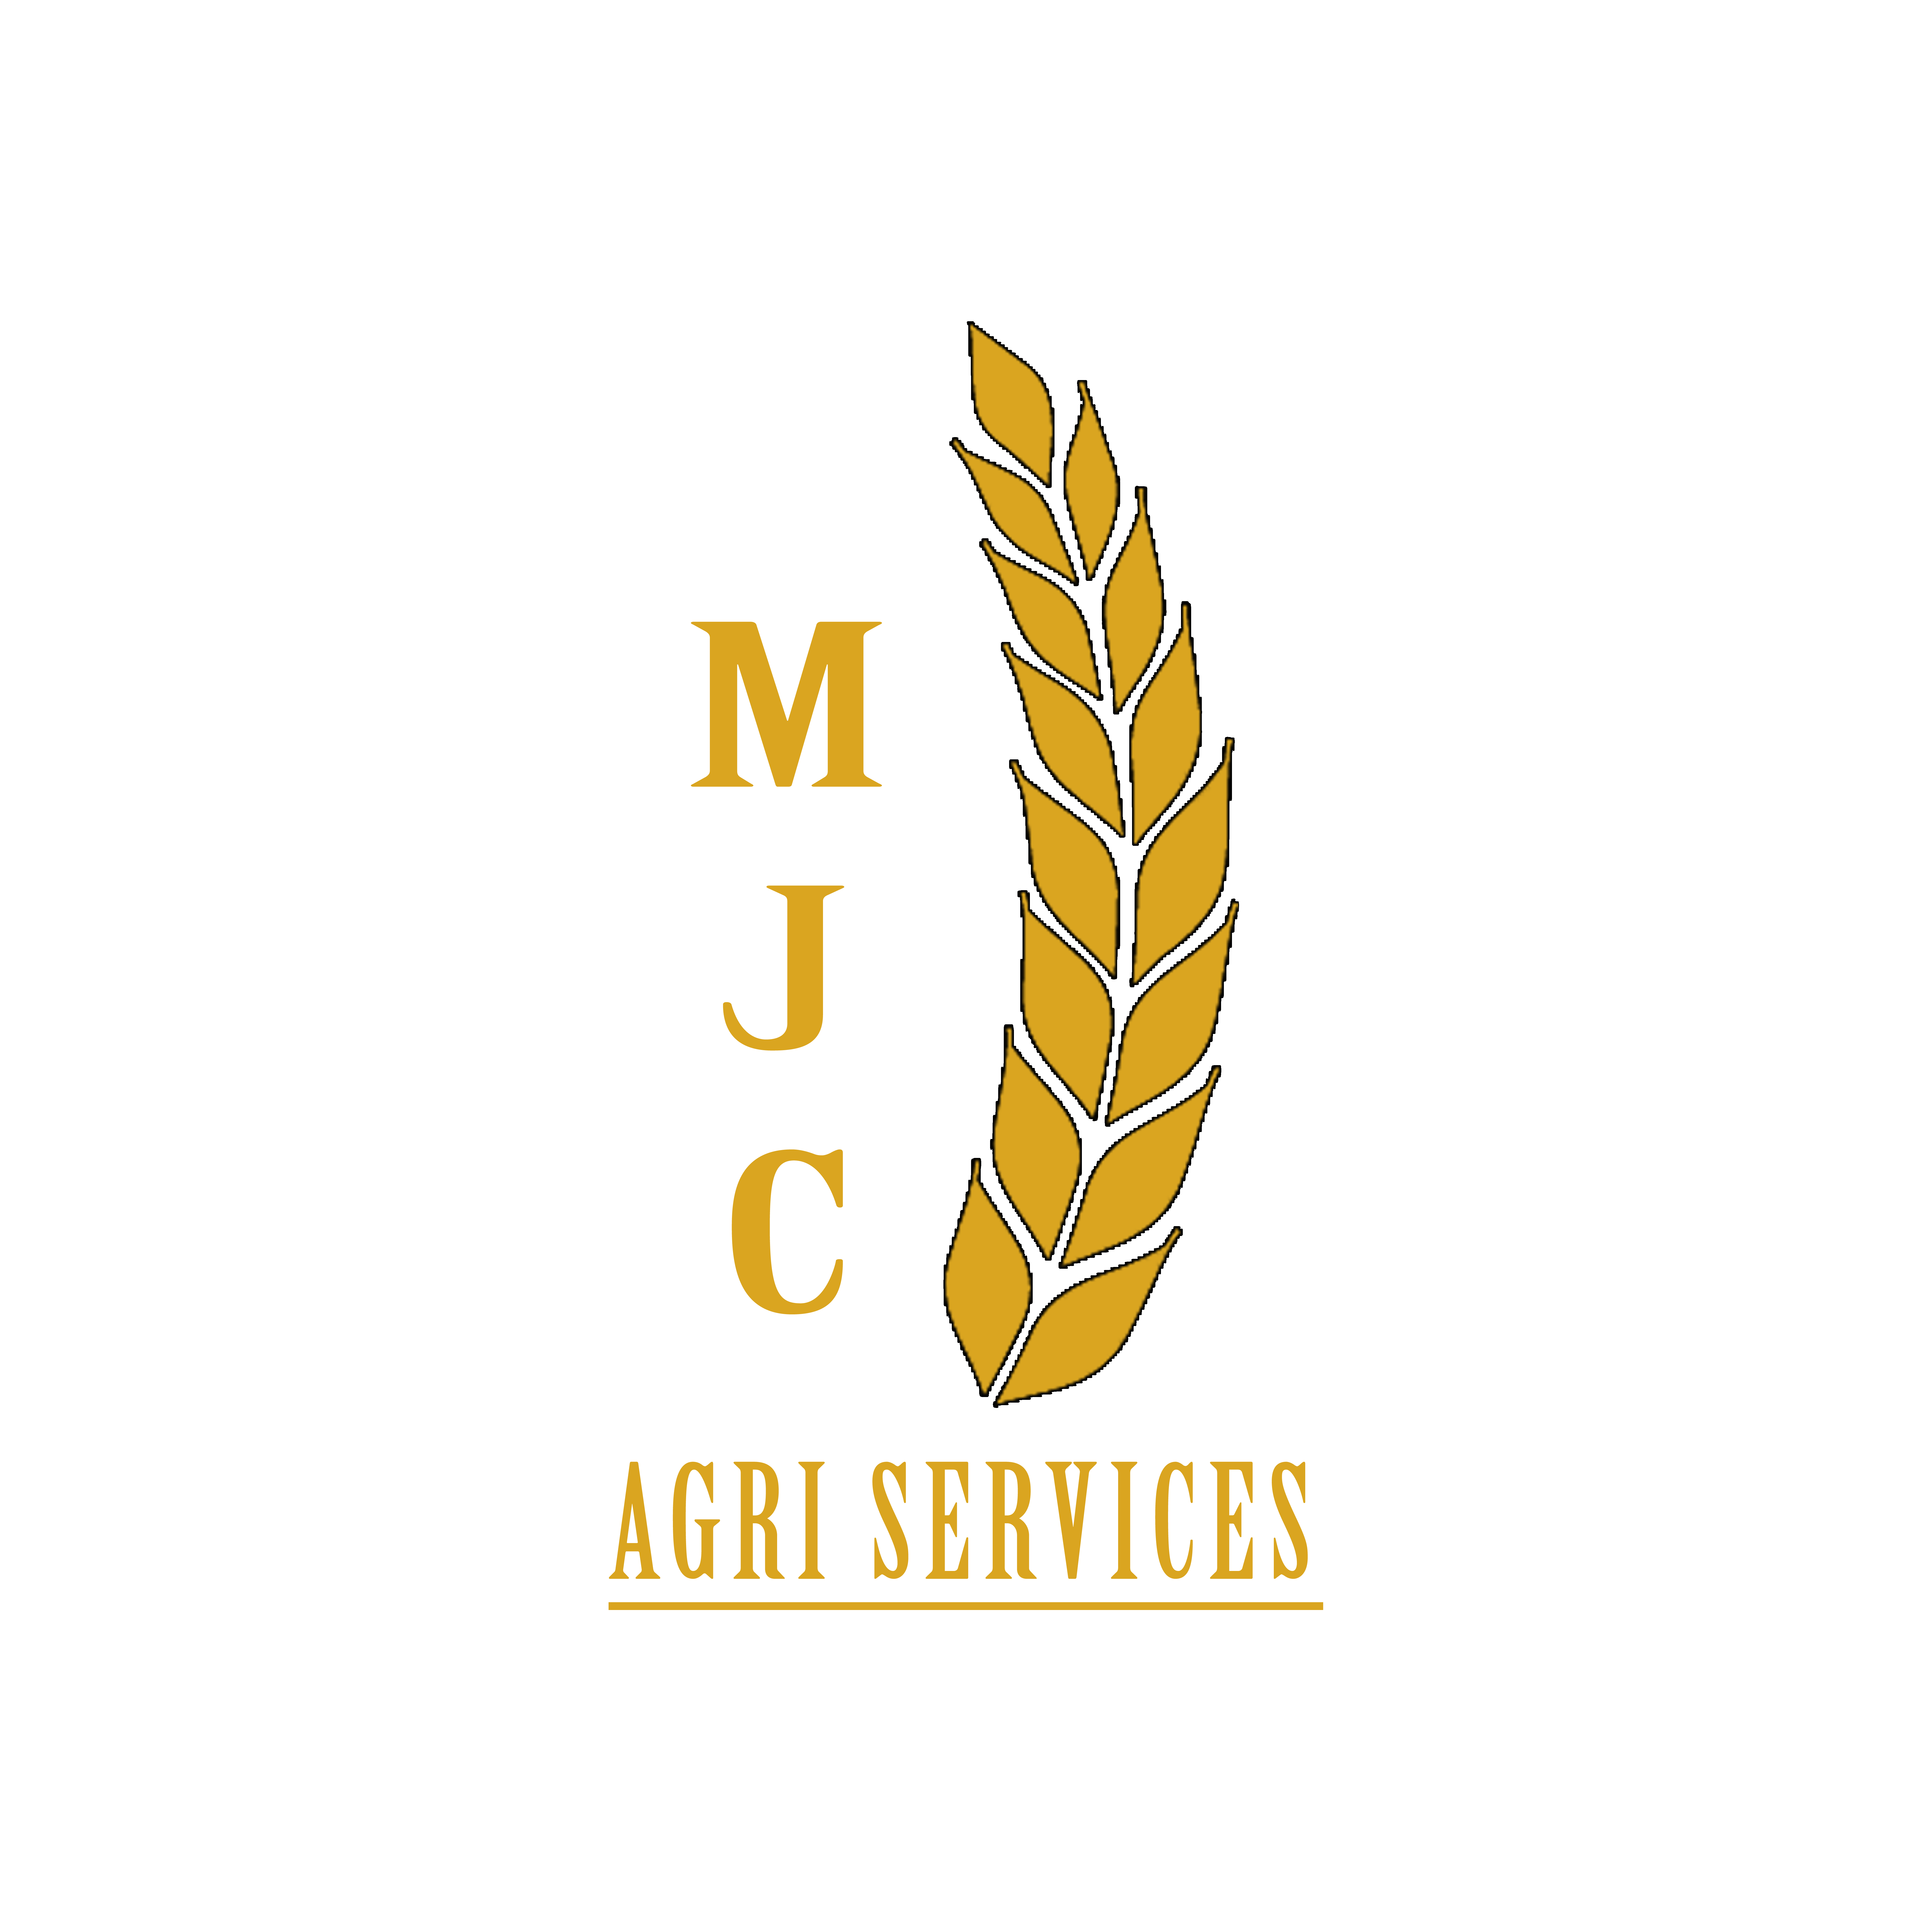 MJC Agri Services